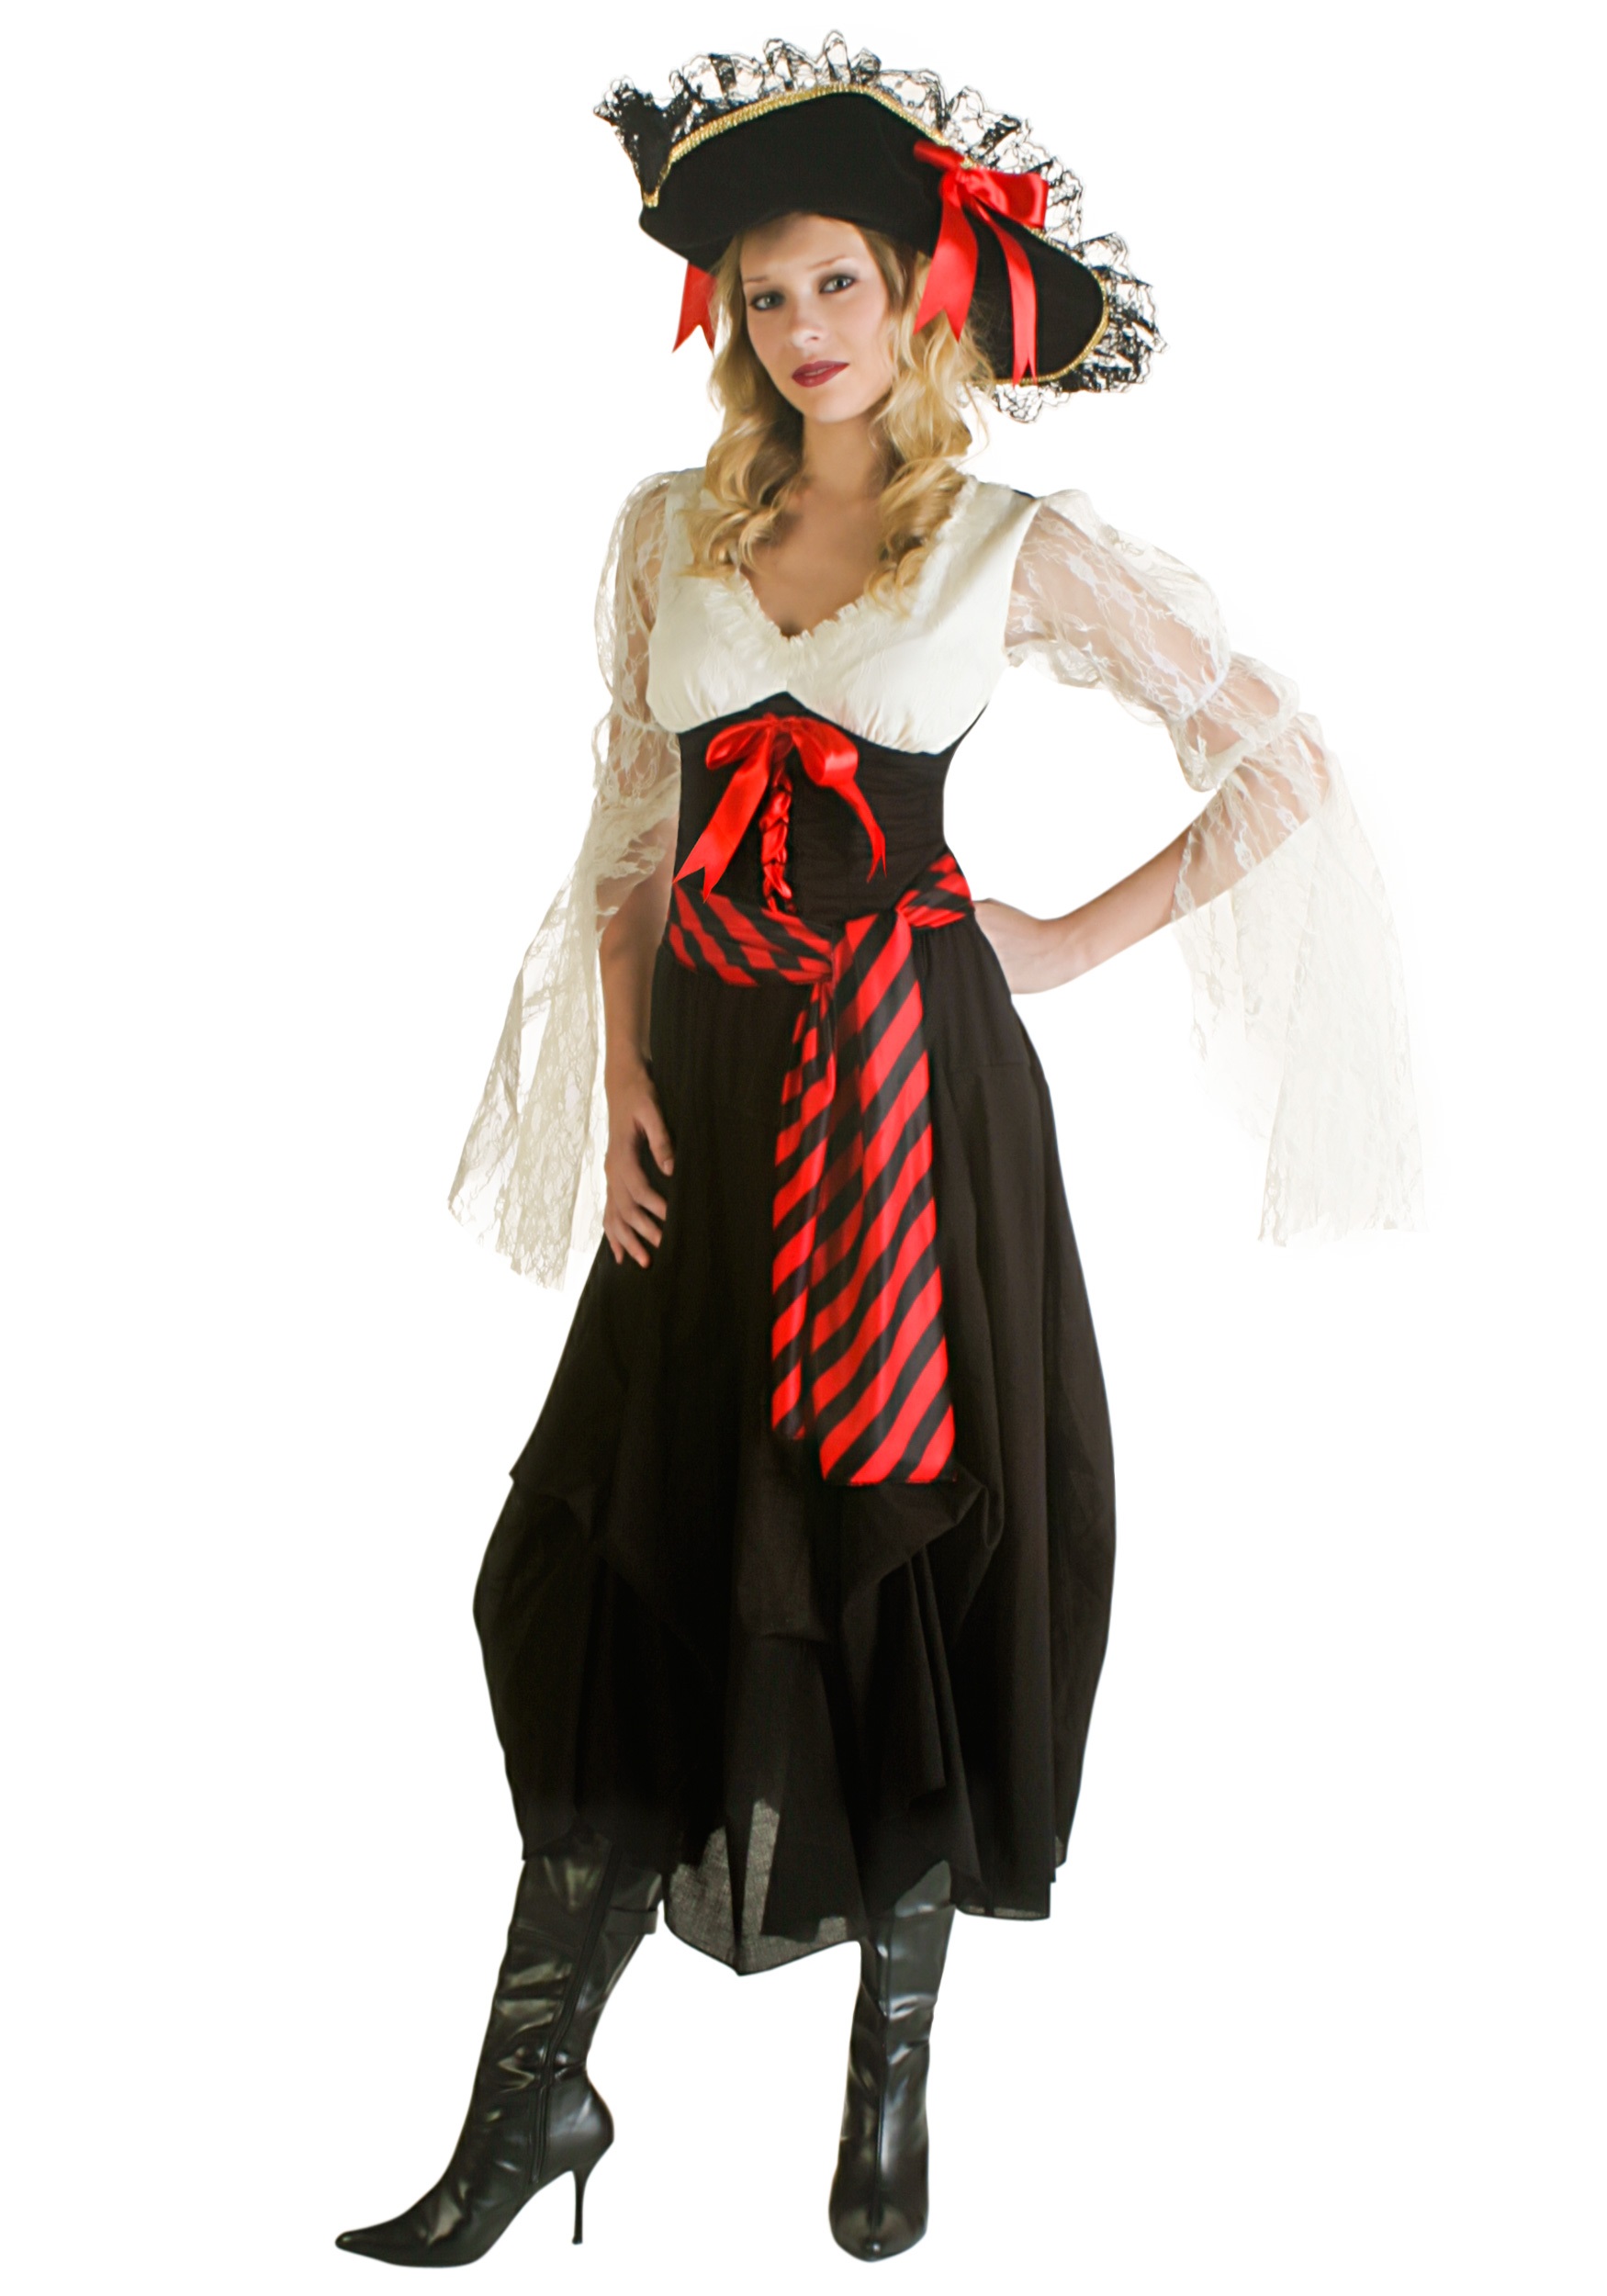 Sexy Female Pirate Costume Halloween Costume Ideas 2019 6765